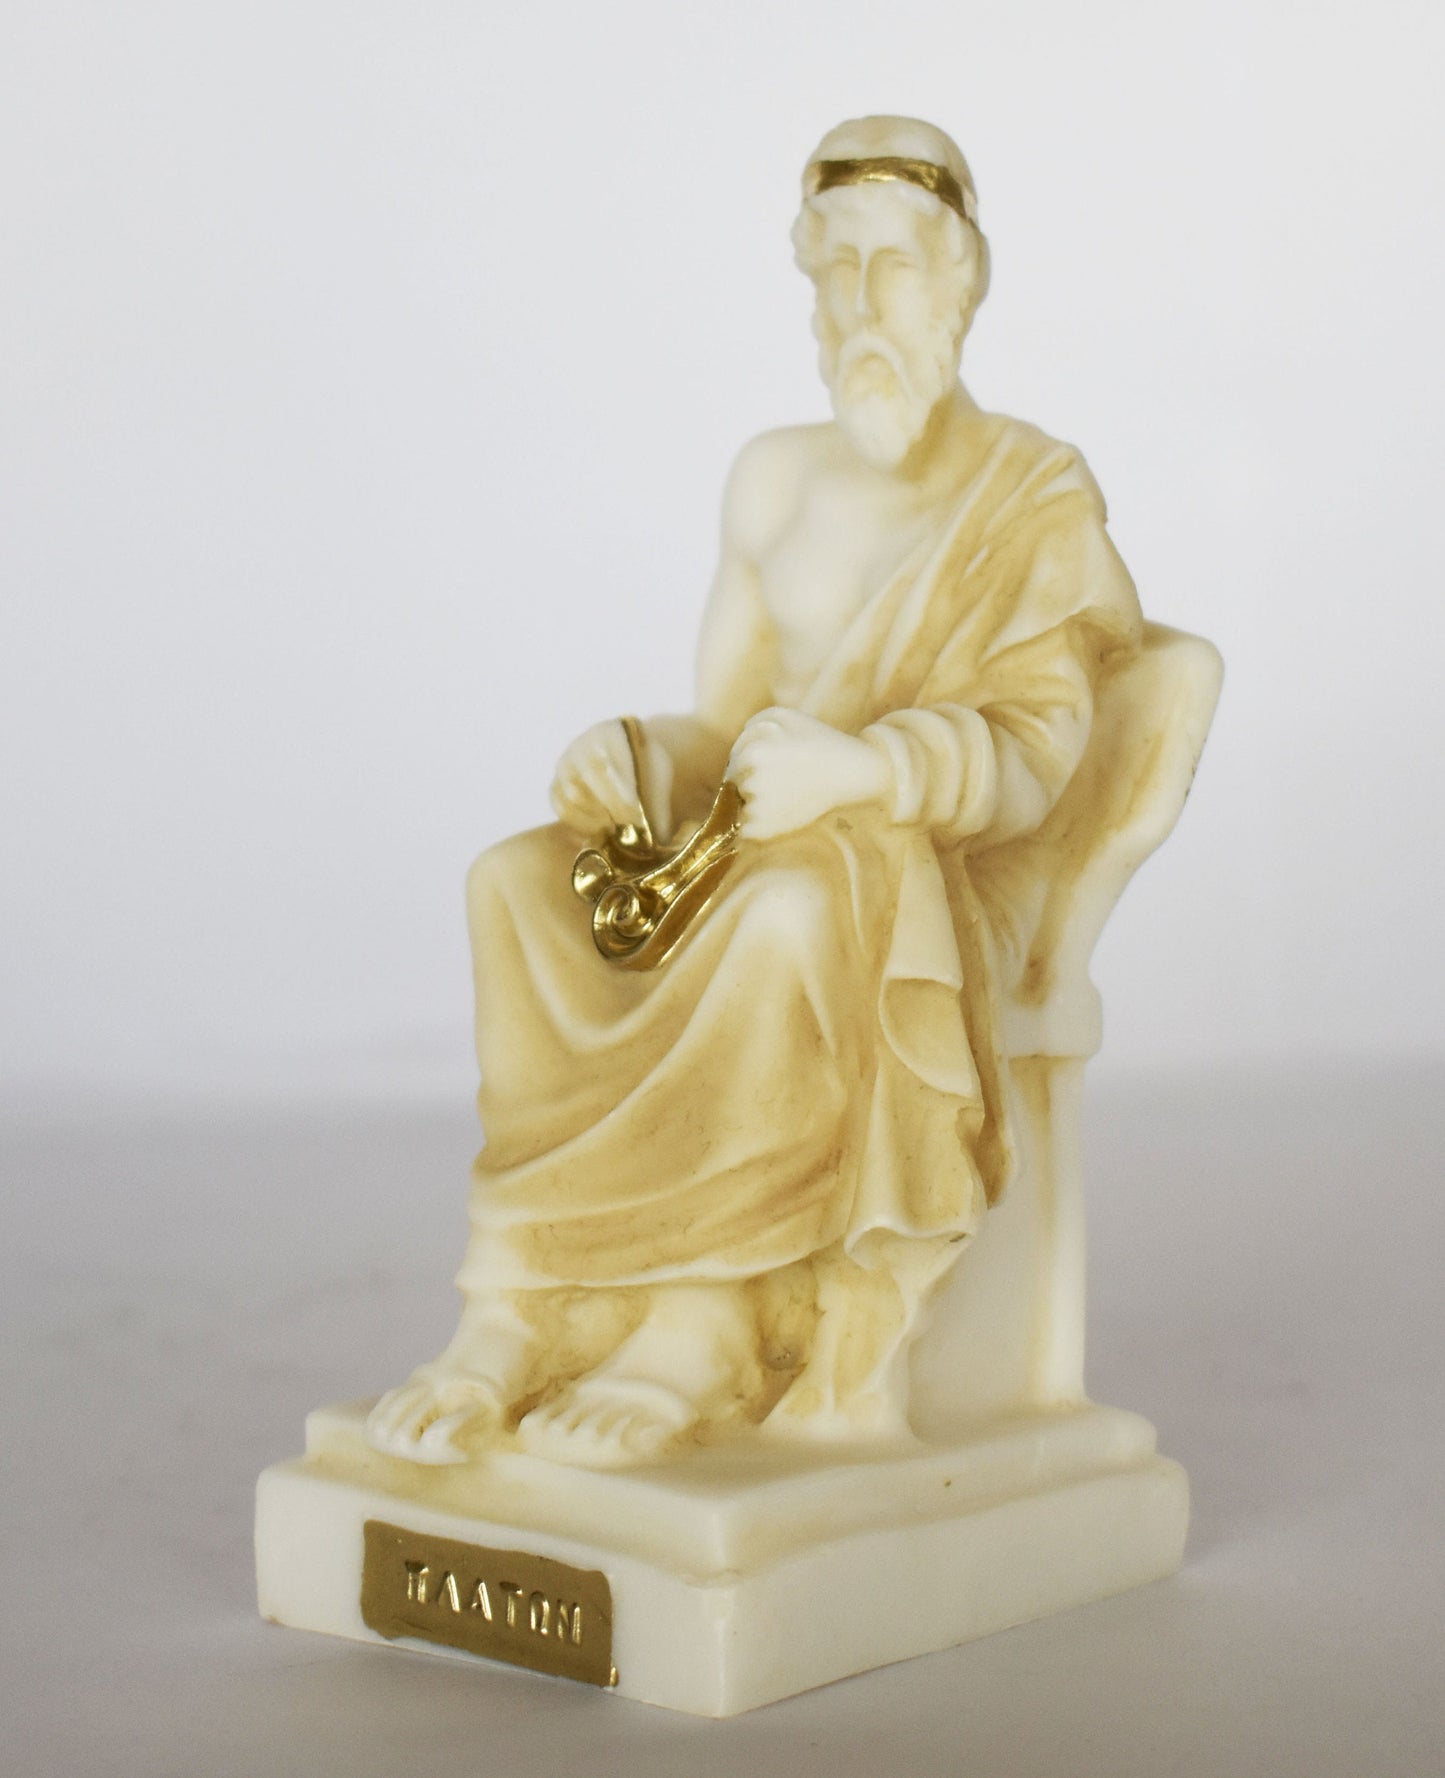 Plato - Ancient Greek Philosopher, Student of Socrates, Teacher of Aristotle - Alabaster Sculpture